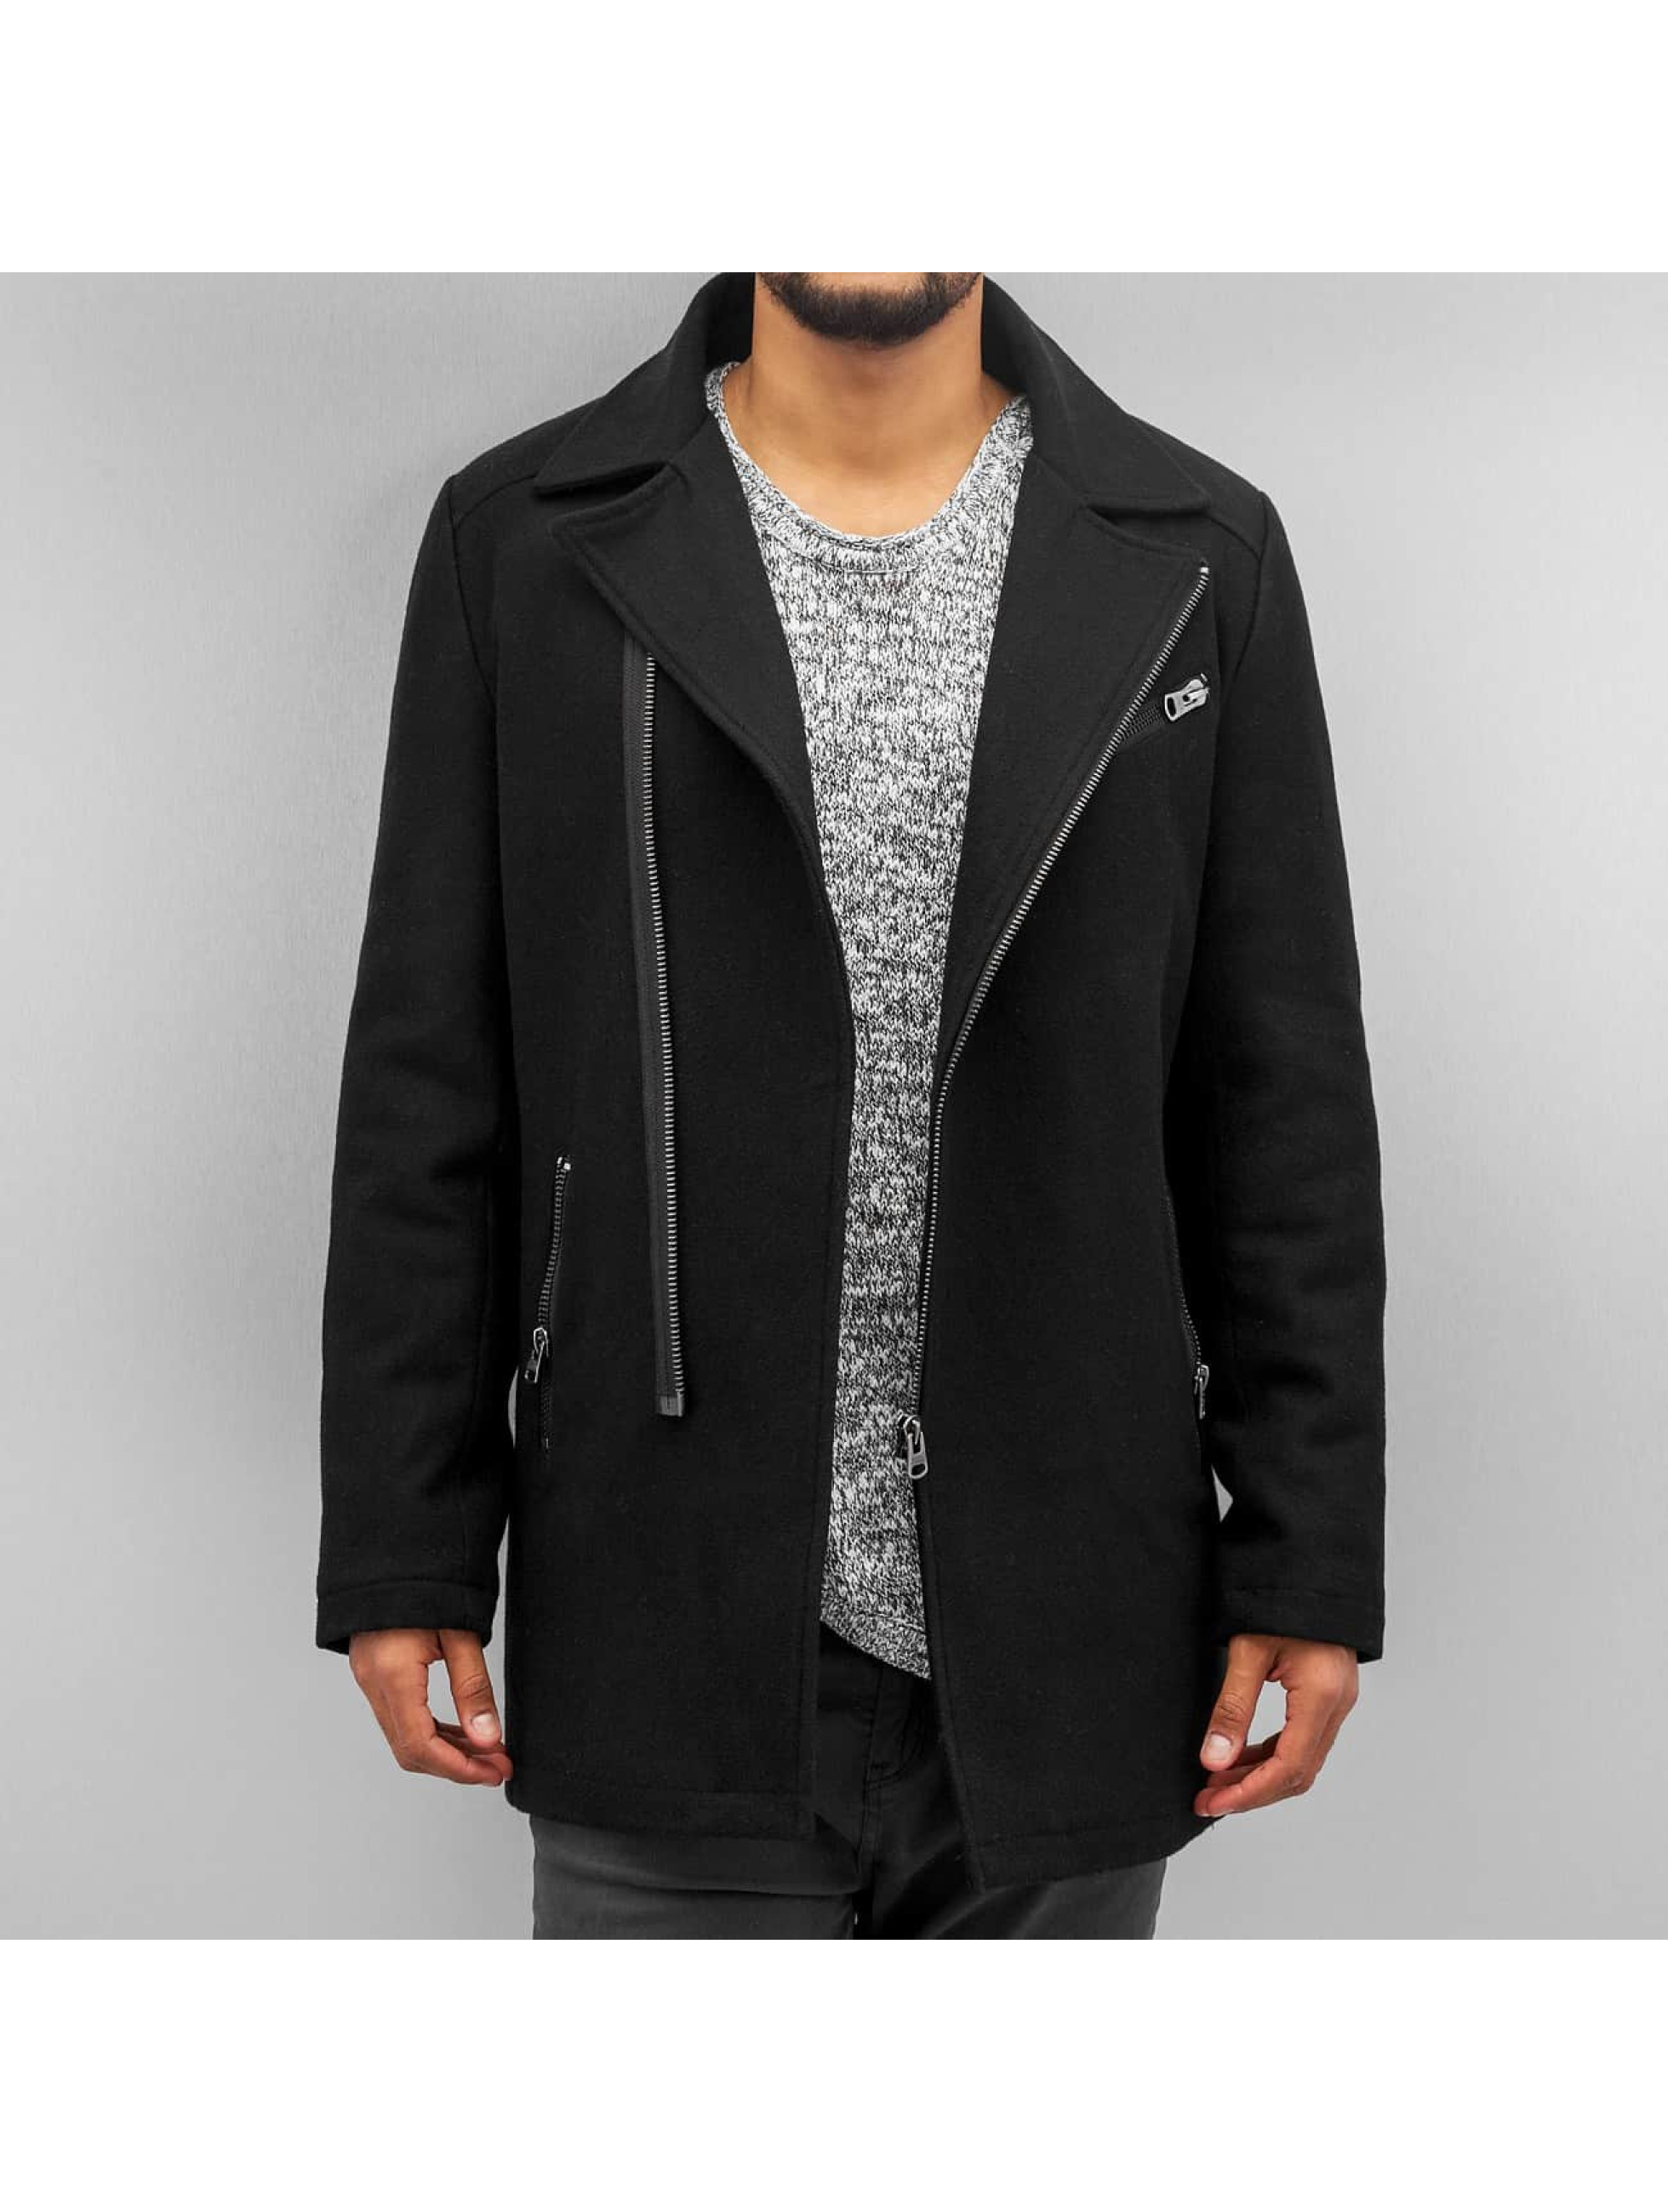 SHINE Original jas / Parka Wool Coat in zwart